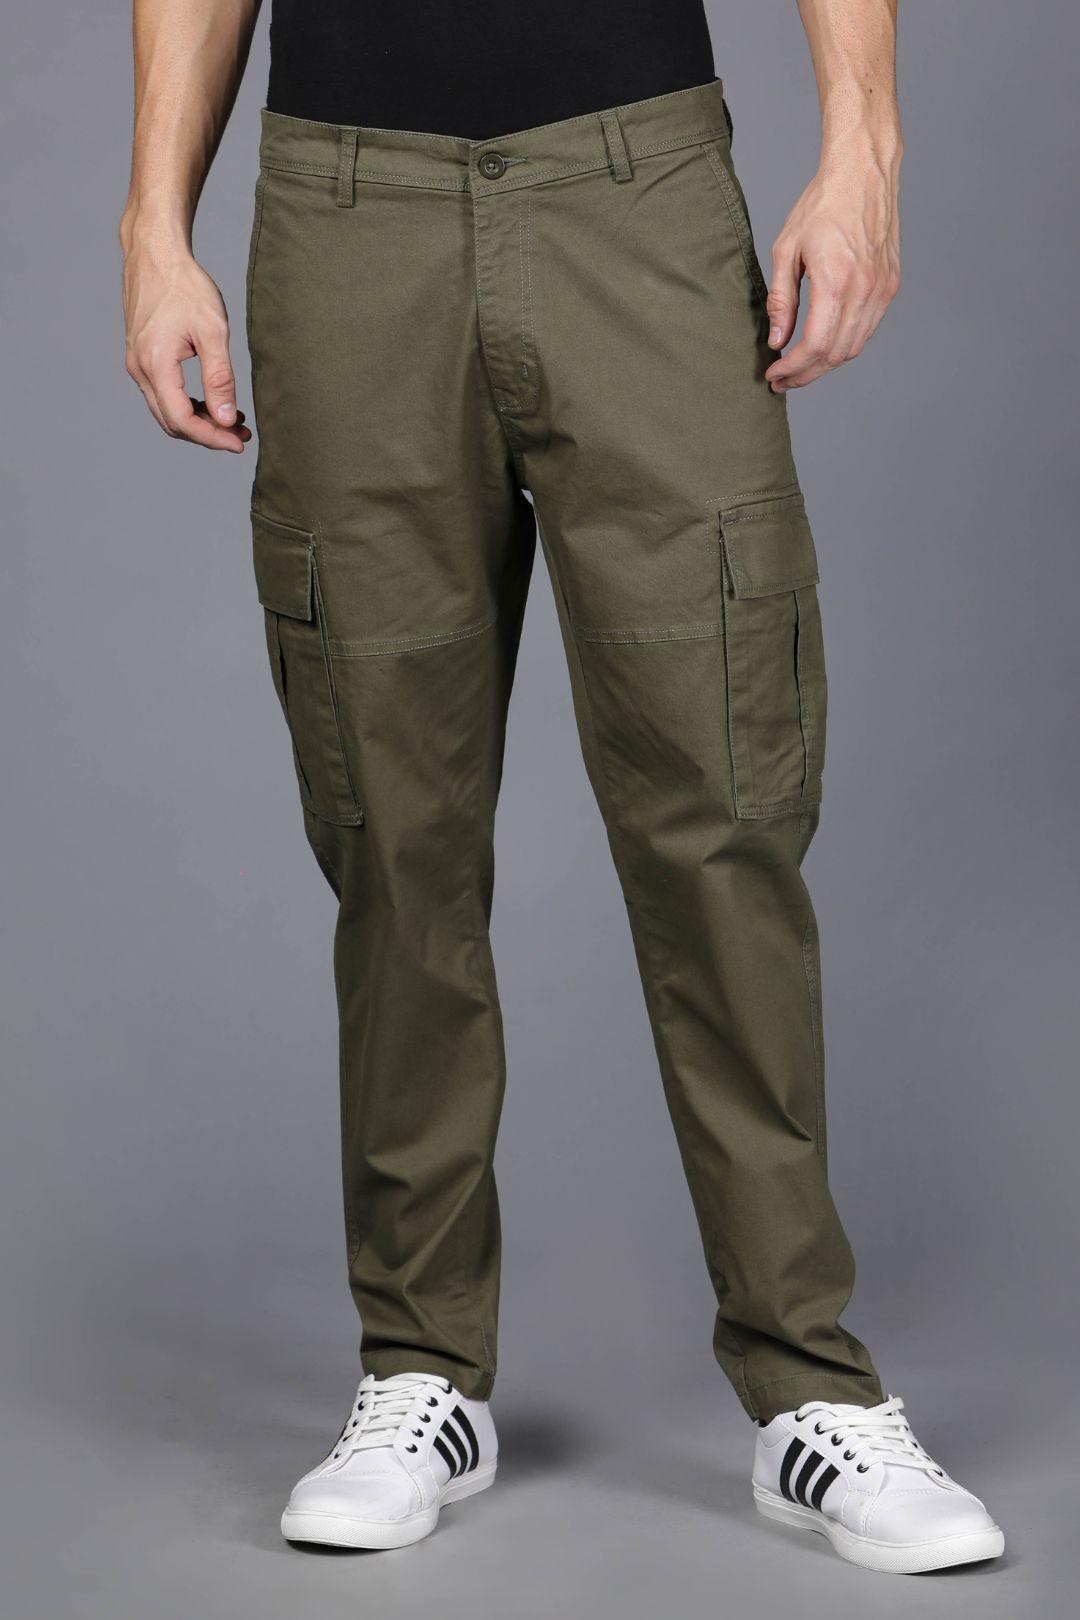 Buy Colva Boys Cotton Green Cargo Pant with Belt Size 36 at Amazonin